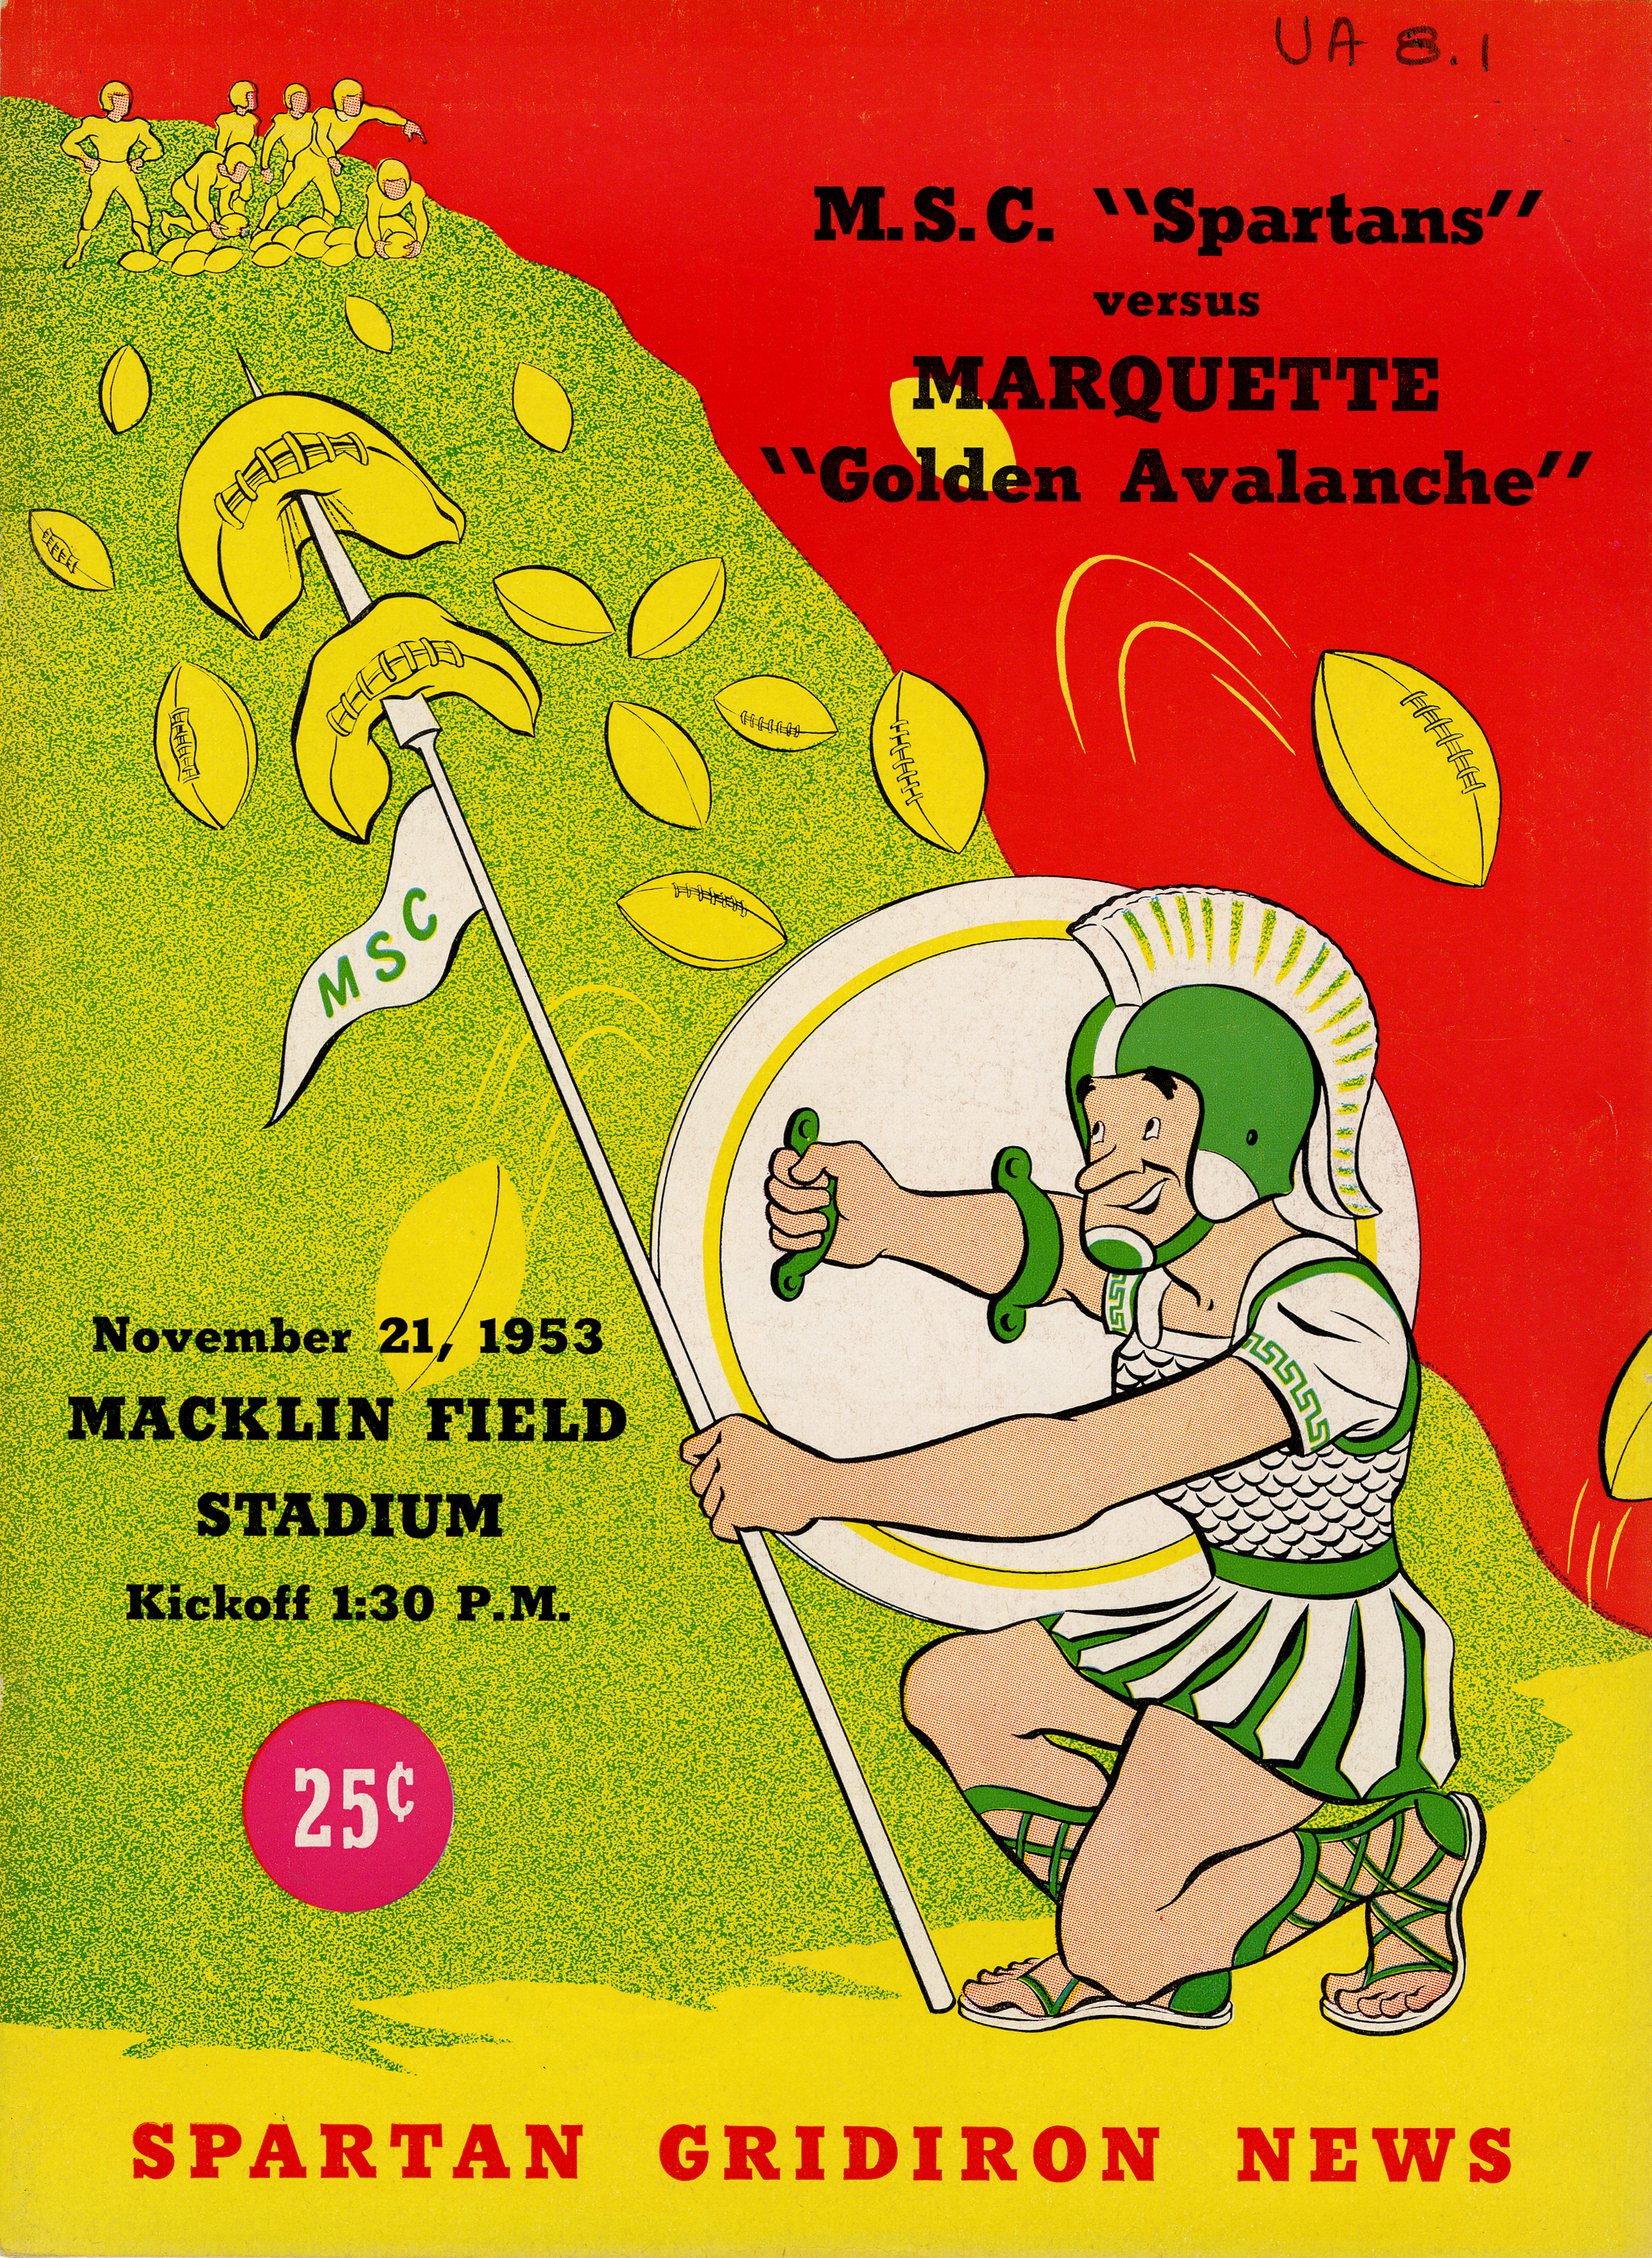 MSC vs. Marquette, Spartan Gridiron News, November 21, 1953